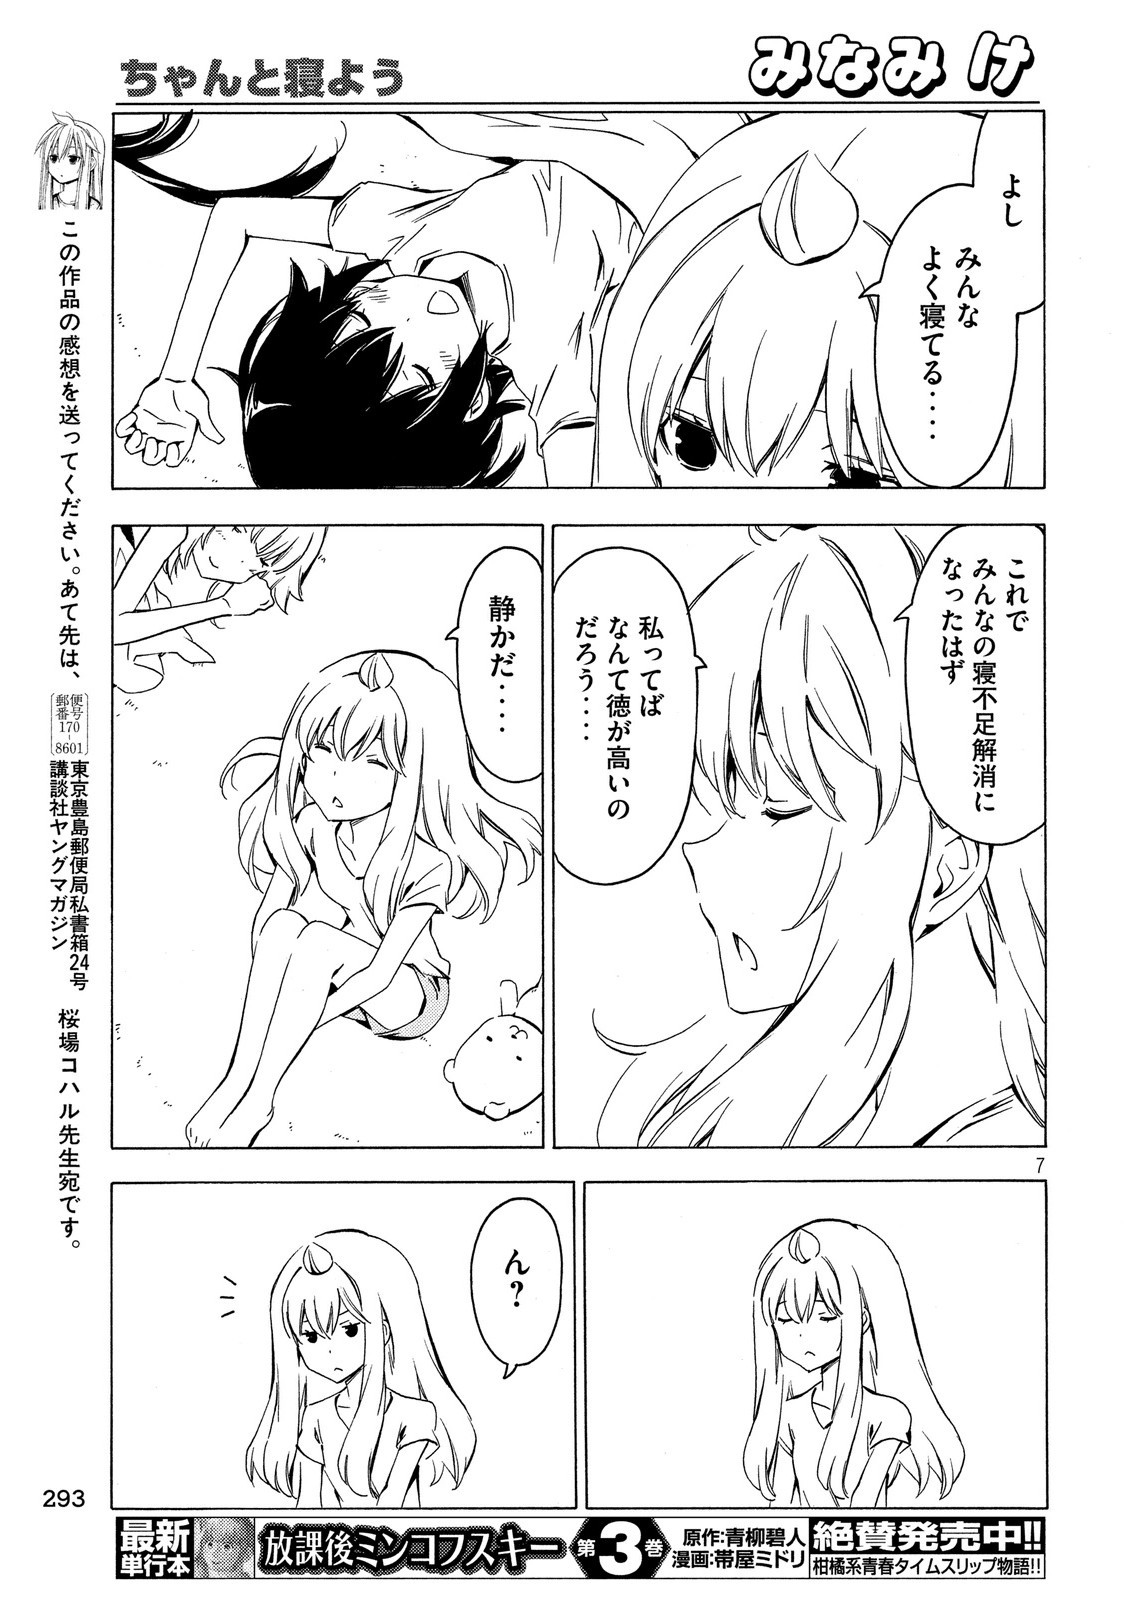 Minami-ke - Chapter 274 - Page 7